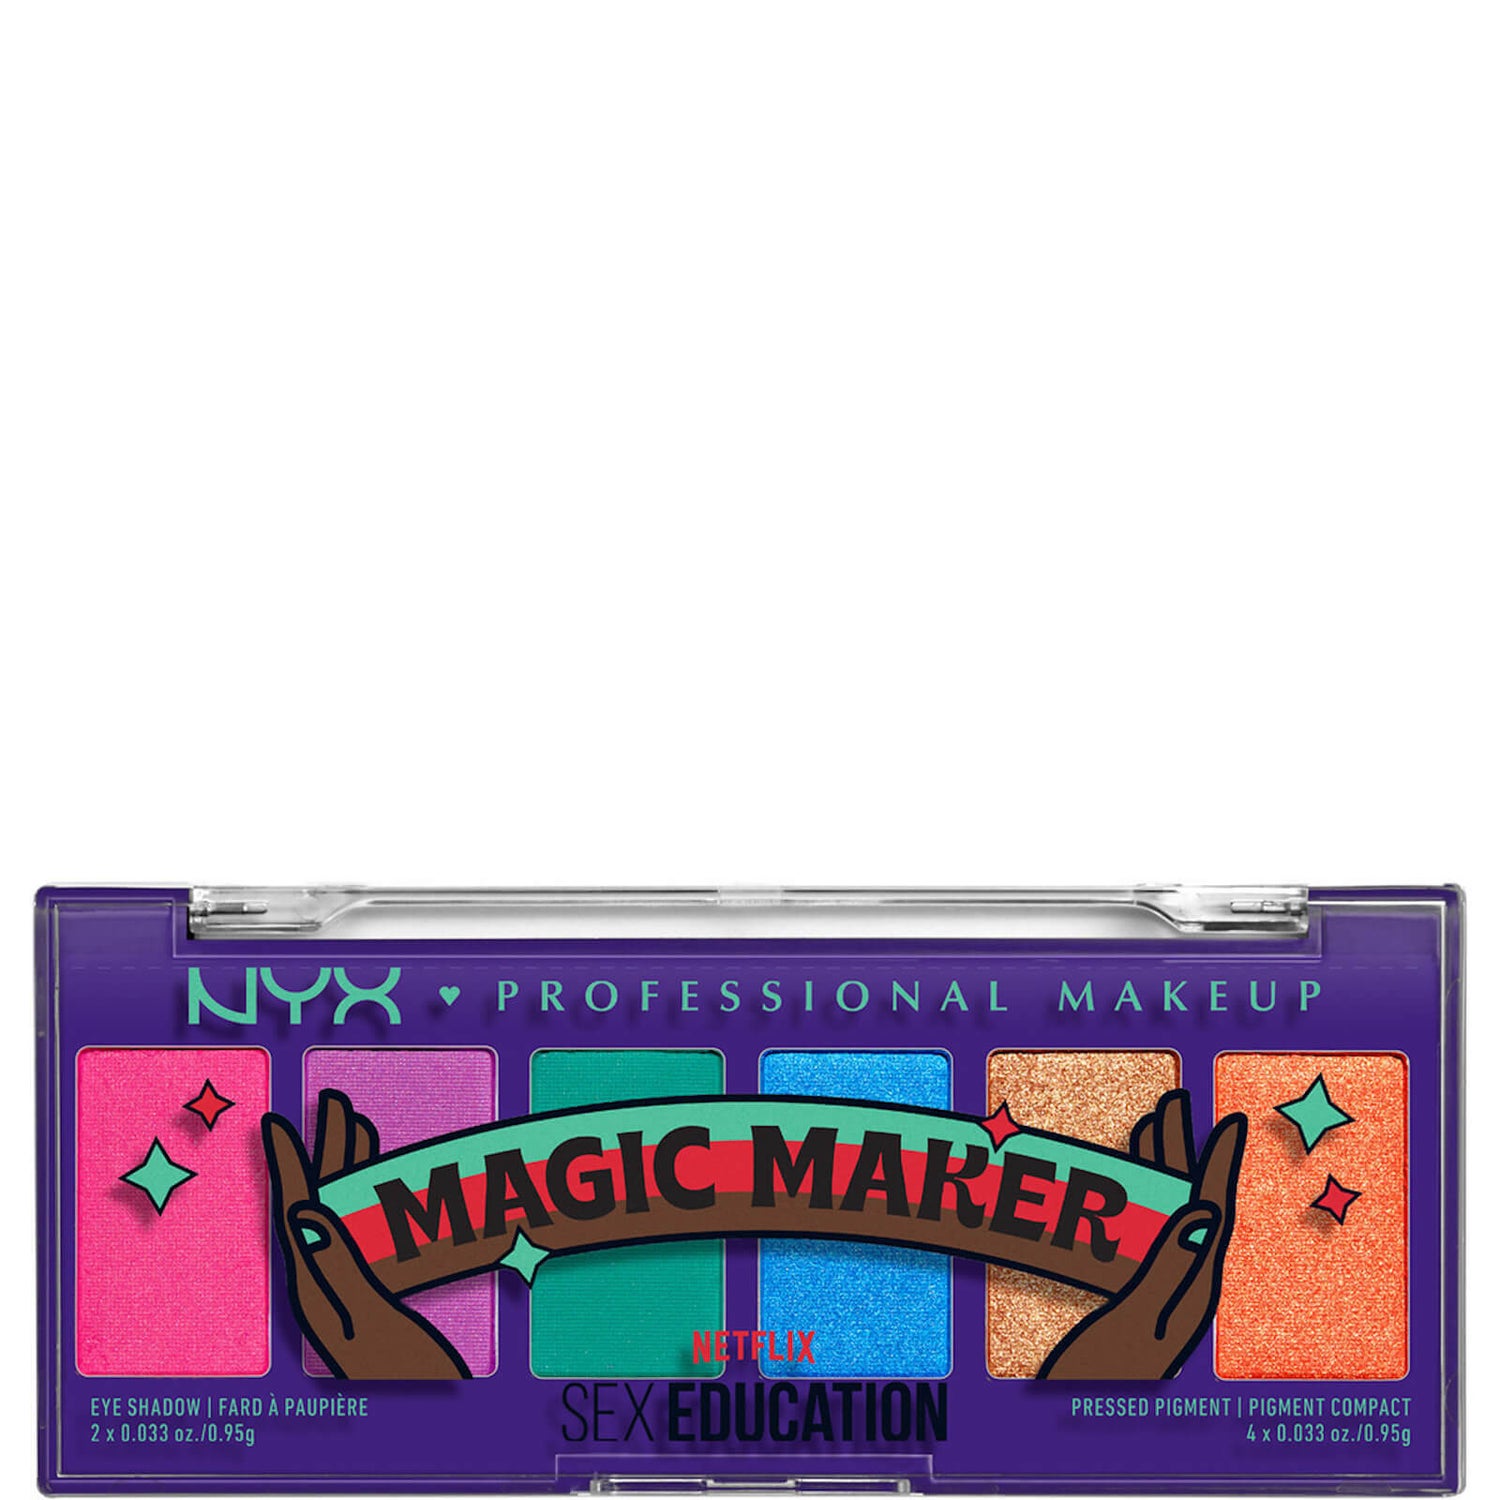 NYX Professional Makeup x Netflix's Sex Education Limited Edition 'Magic Maker' Schaduwpalet